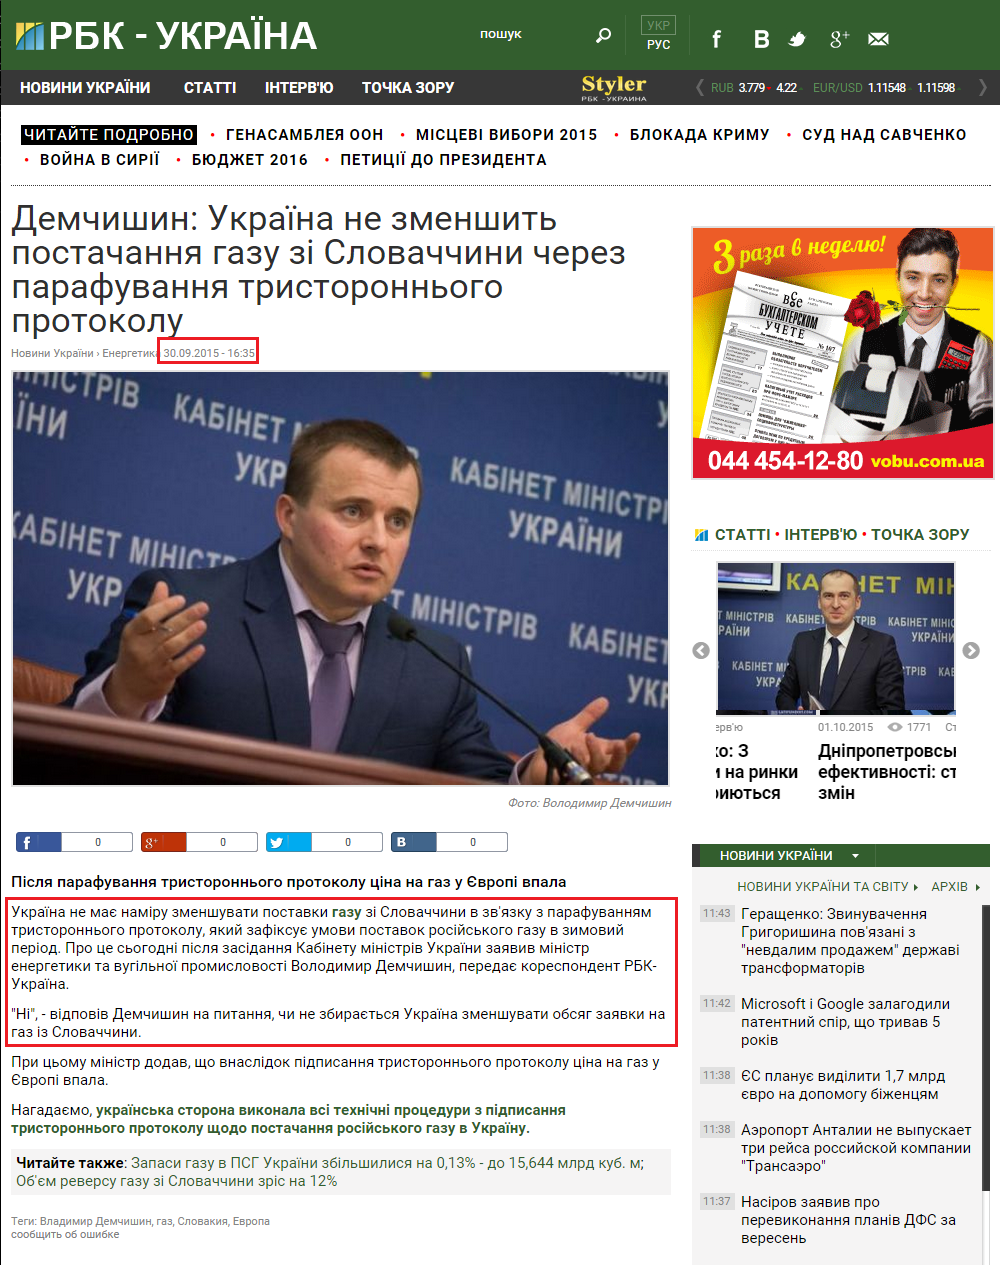 http://www.rbc.ua/ukr/news/demchishin-ukraina-umenshit-postavki-gaza-1443620159.html